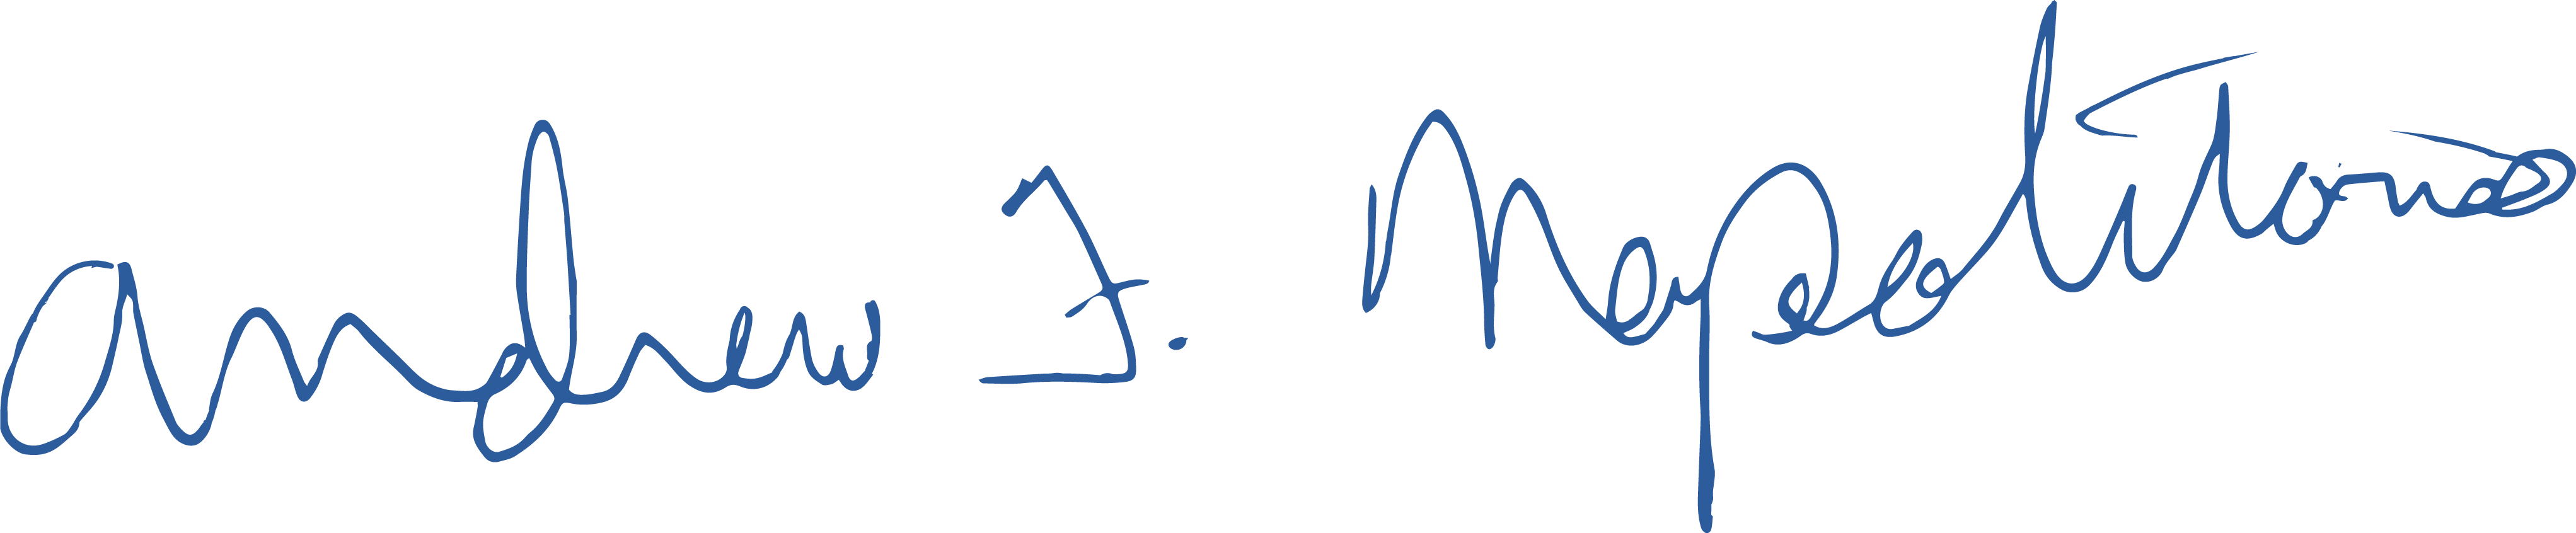 signature by Andrew Napolitano